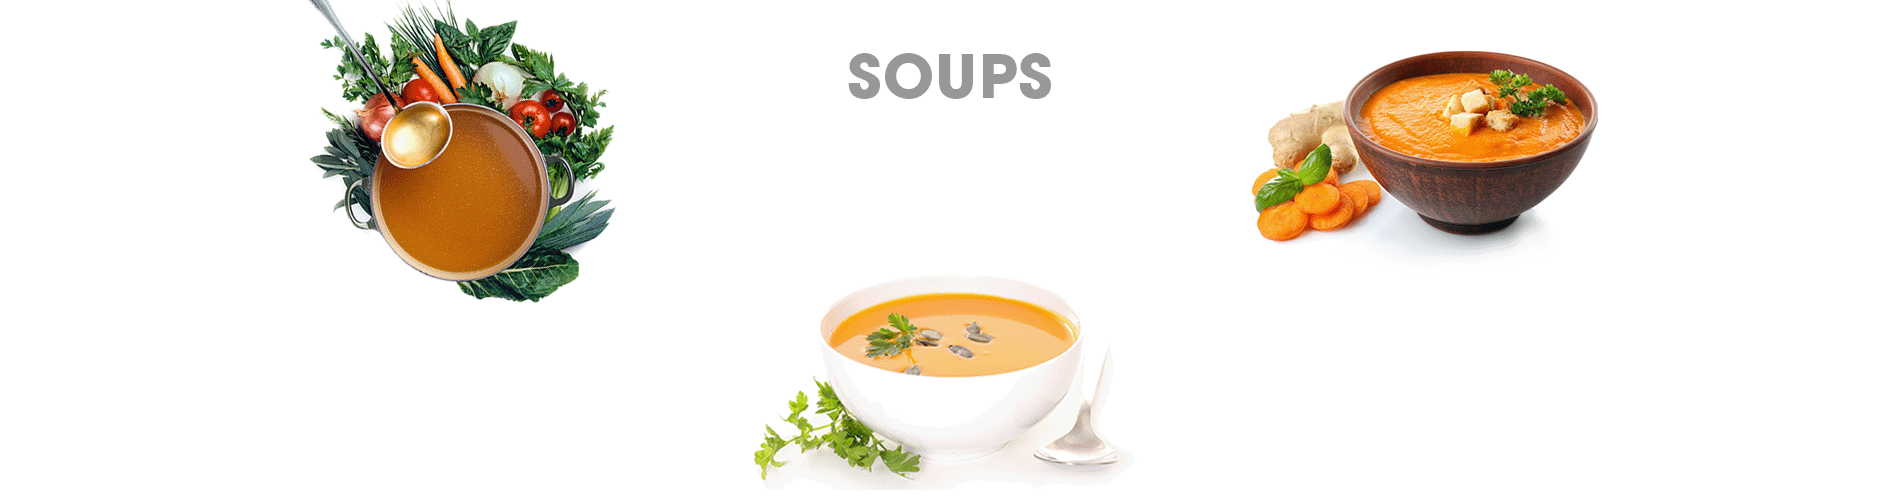 Category - Soups 1900x500